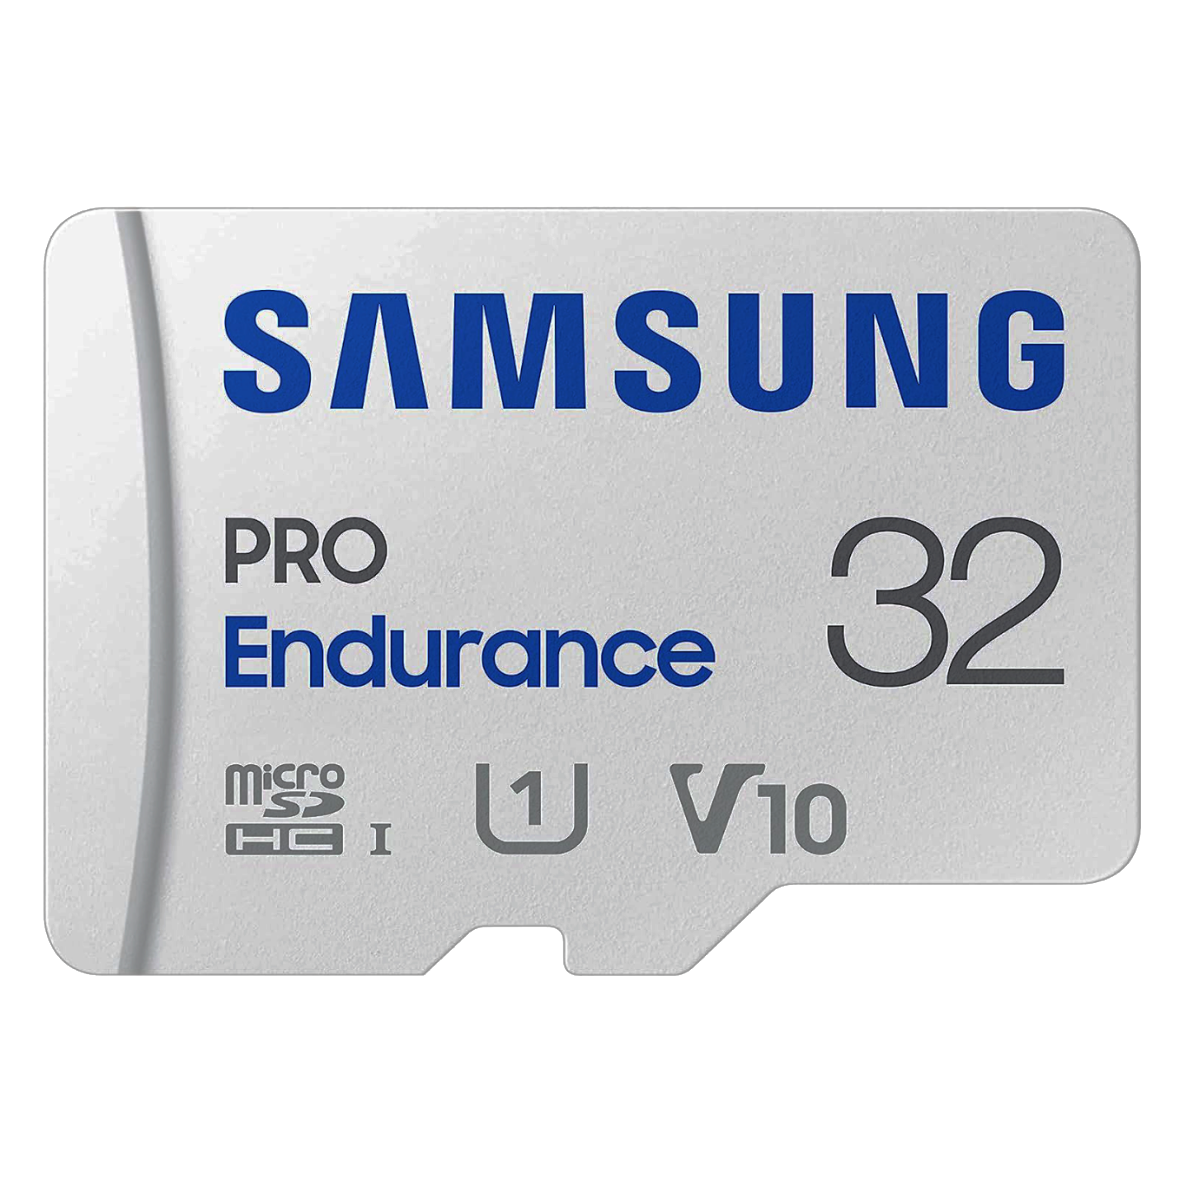 A Samsung Pro Endurance microSDXC card